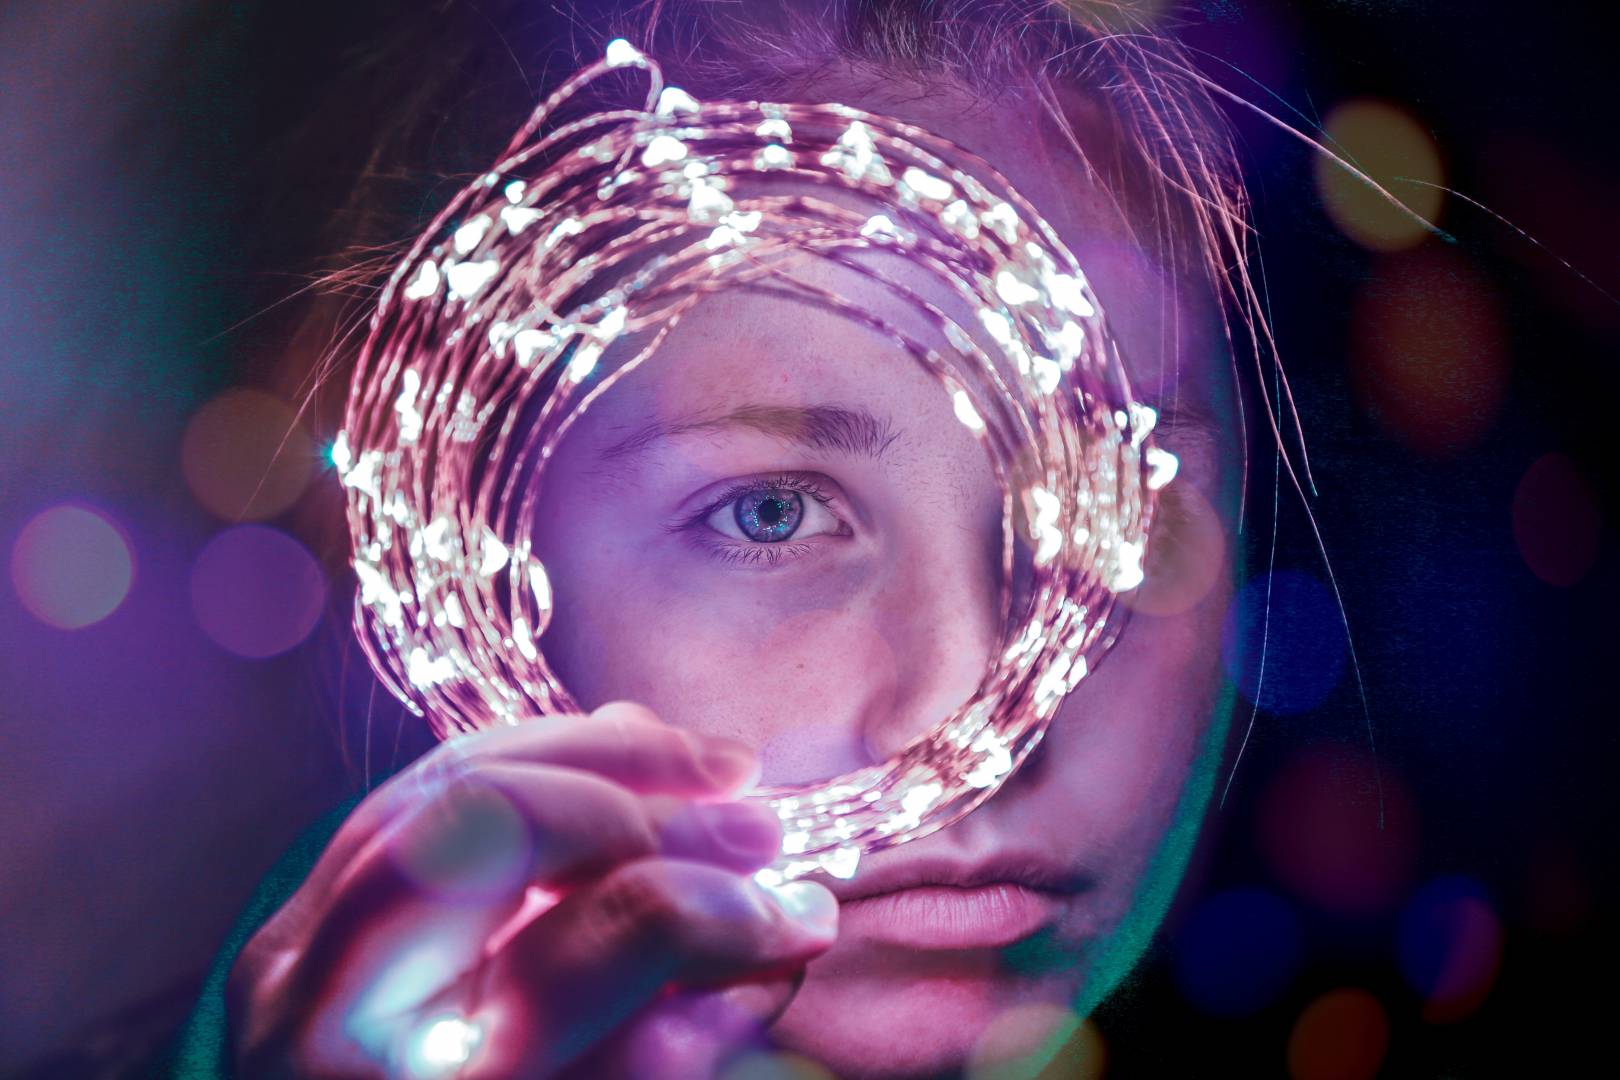 Photo Of Girl Looking Through Circle Of Lights By Brendan Church Via Unsplash.com